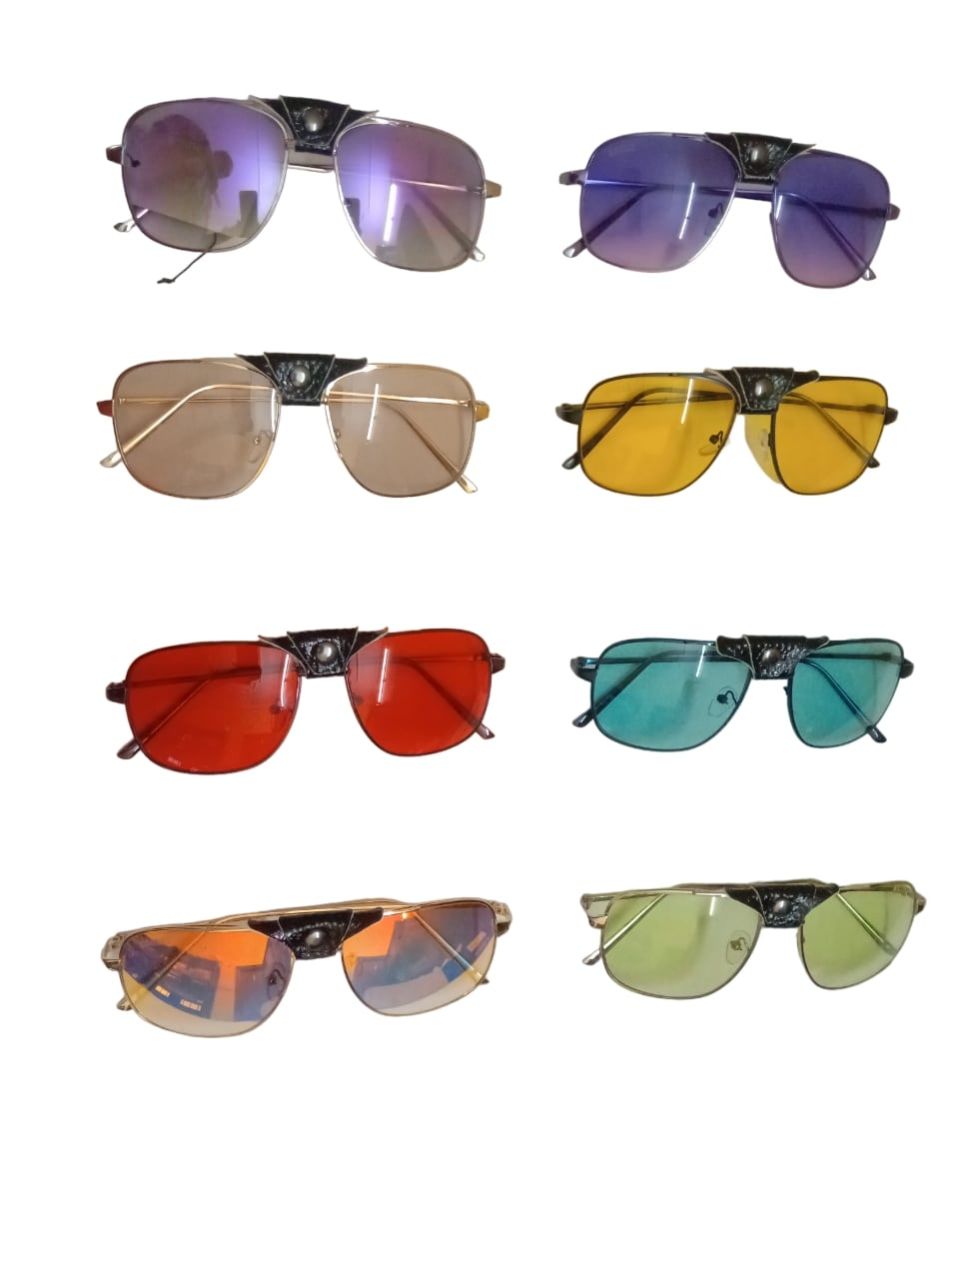 Sunglasses for men | Our K Factory